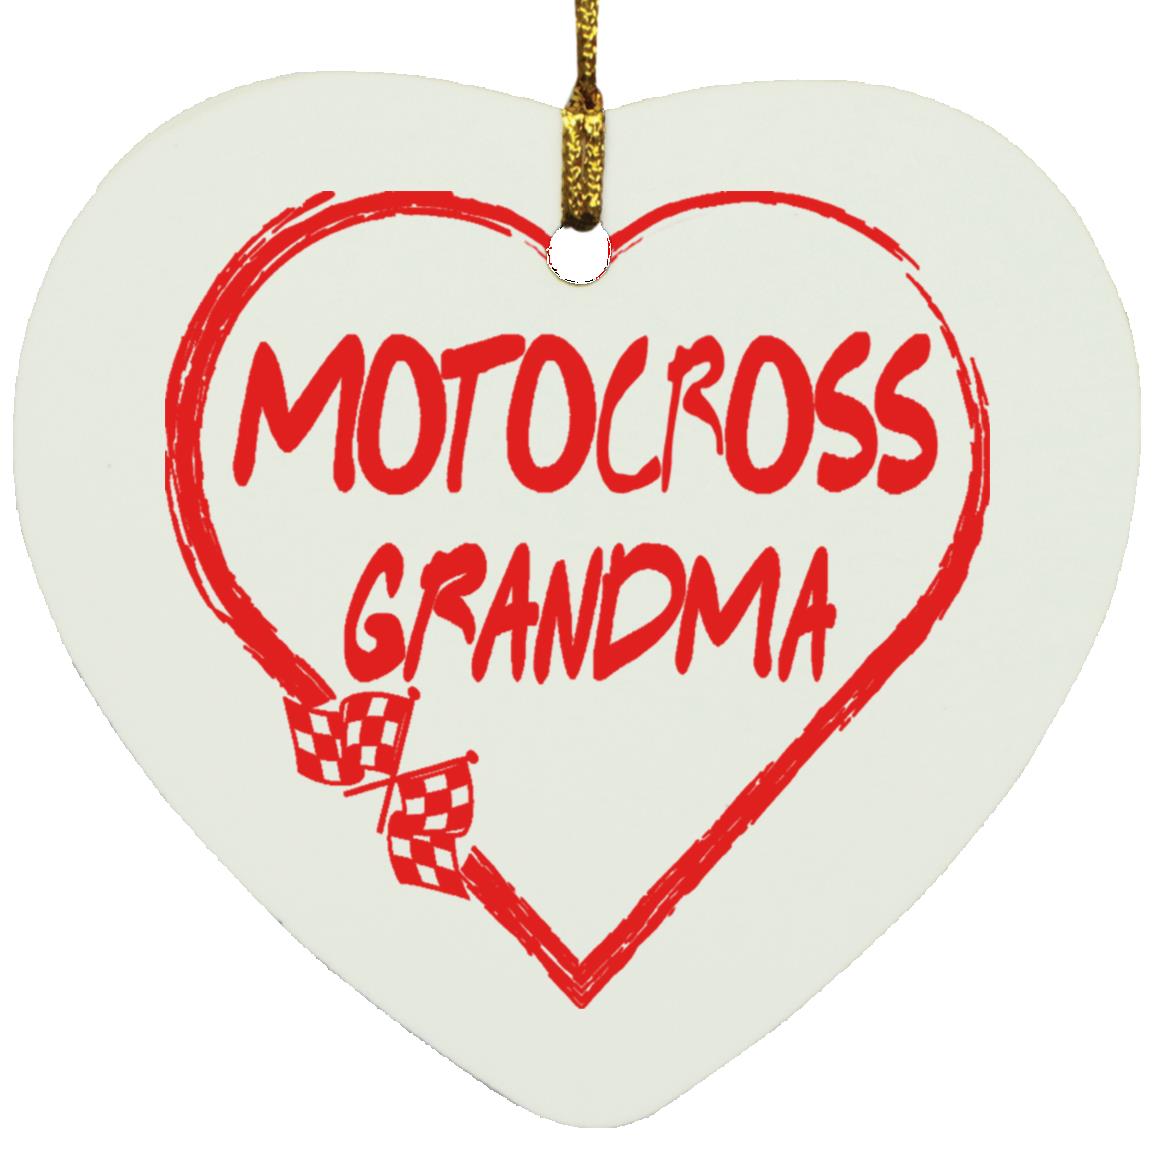 Motocross Grandma Heart Ornament